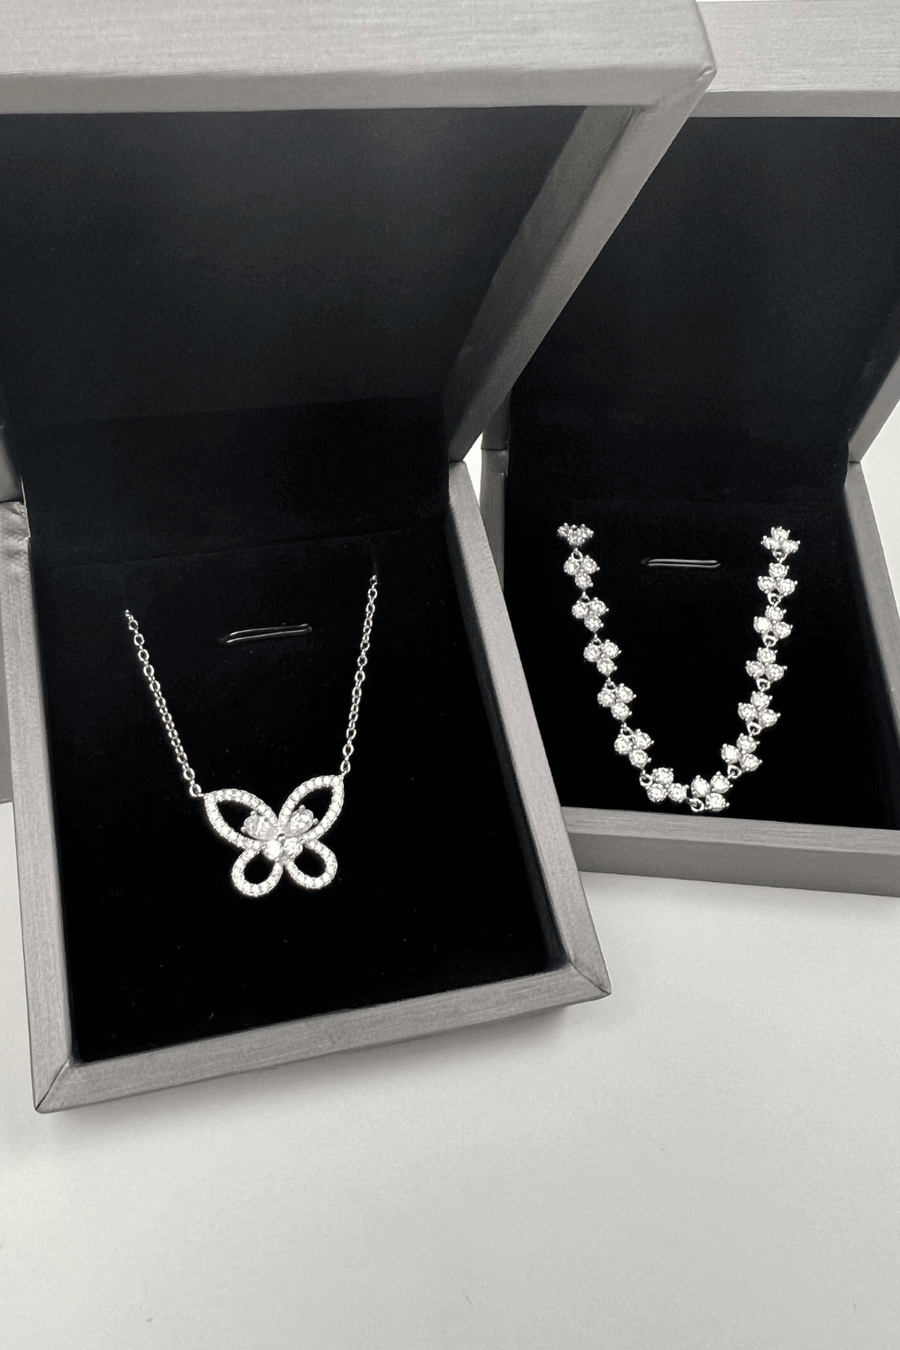 Best Diamond Jewelry Bundle Set Gift | Best Butterfly Diamond Necklace, Bracelet Jewelry Gift for Women, Mother, Wife, Daughter | MASON New York